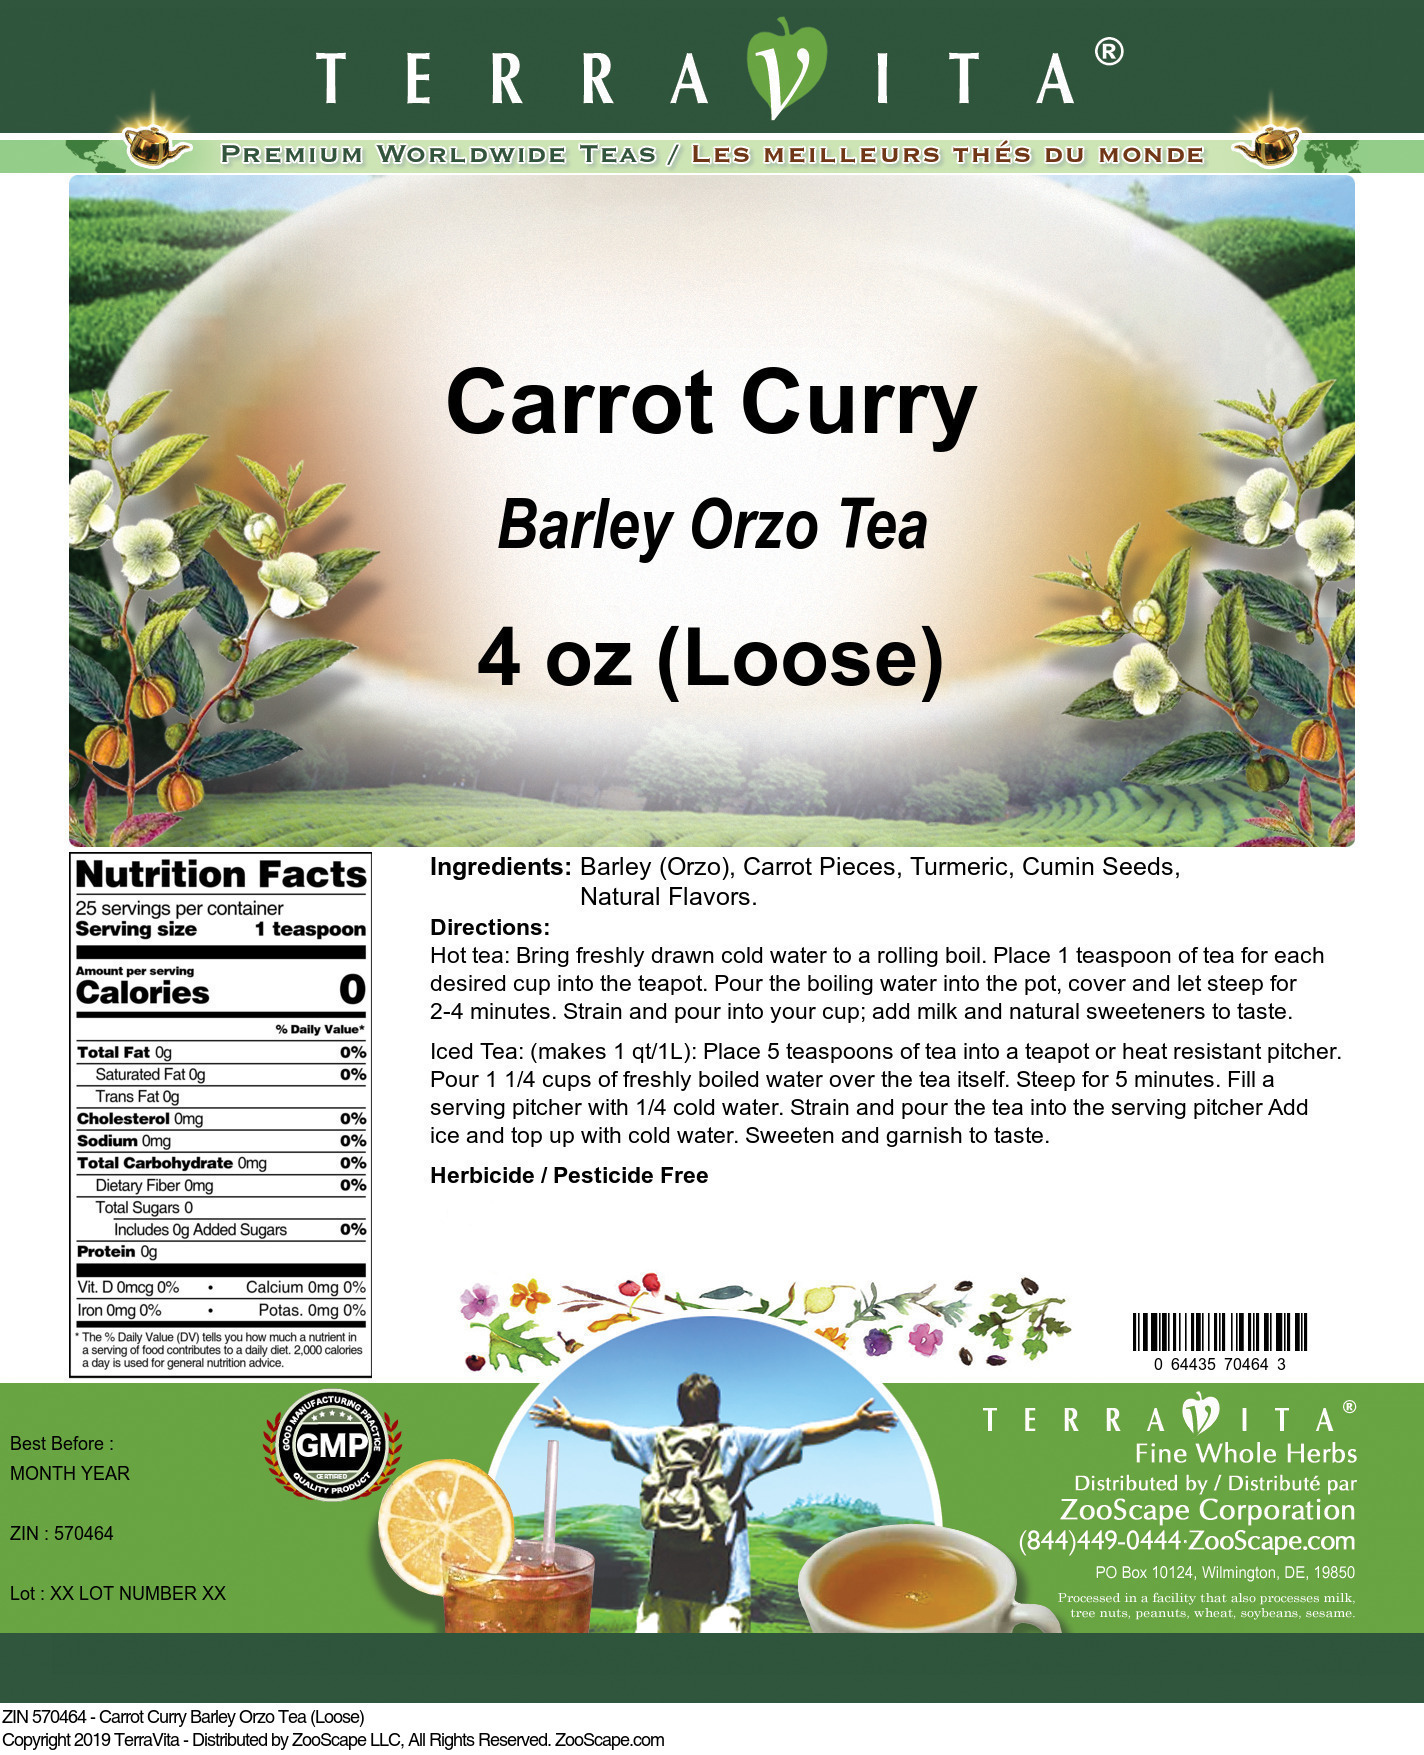 Carrot Curry Barley Orzo Tea (Loose) - Label